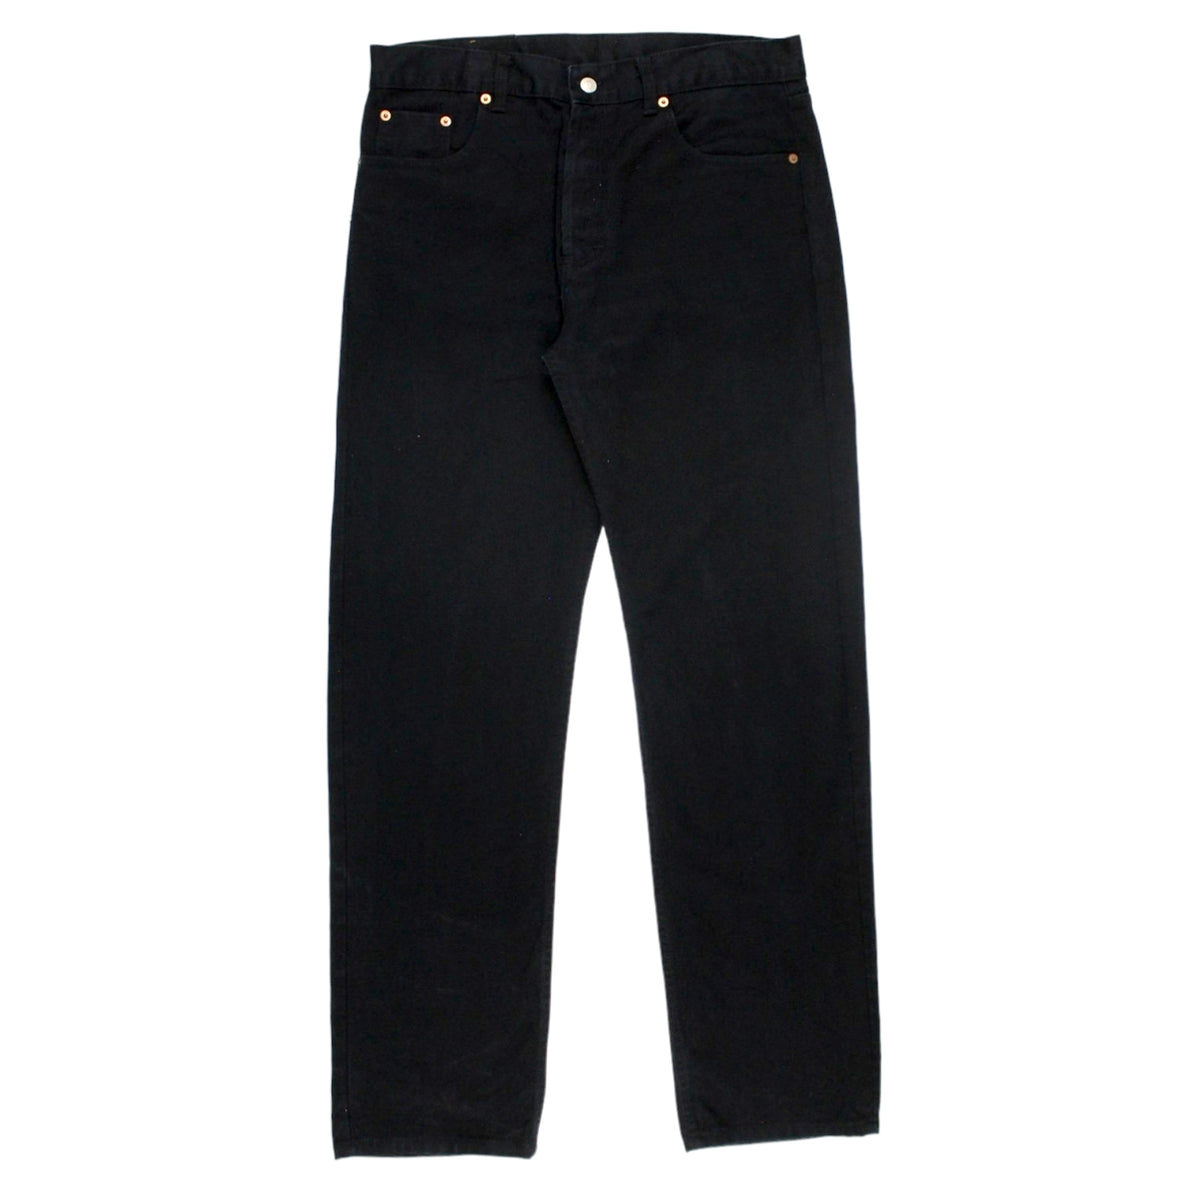 Levi 501's Black Denim Jeans